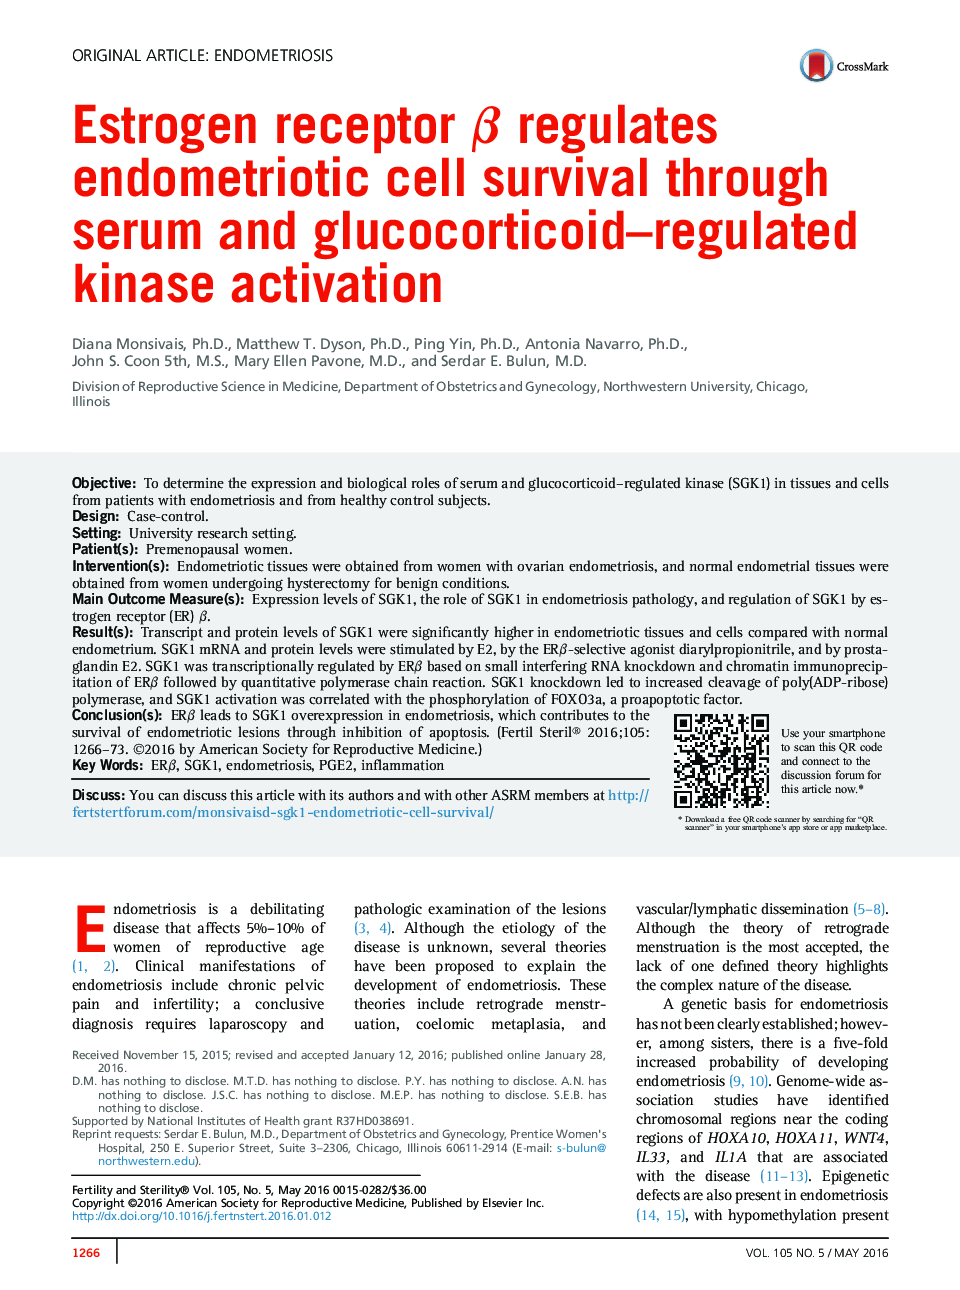 Estrogen receptor Î² regulates endometriotic cell survival through serum and glucocorticoid-regulated kinase activation